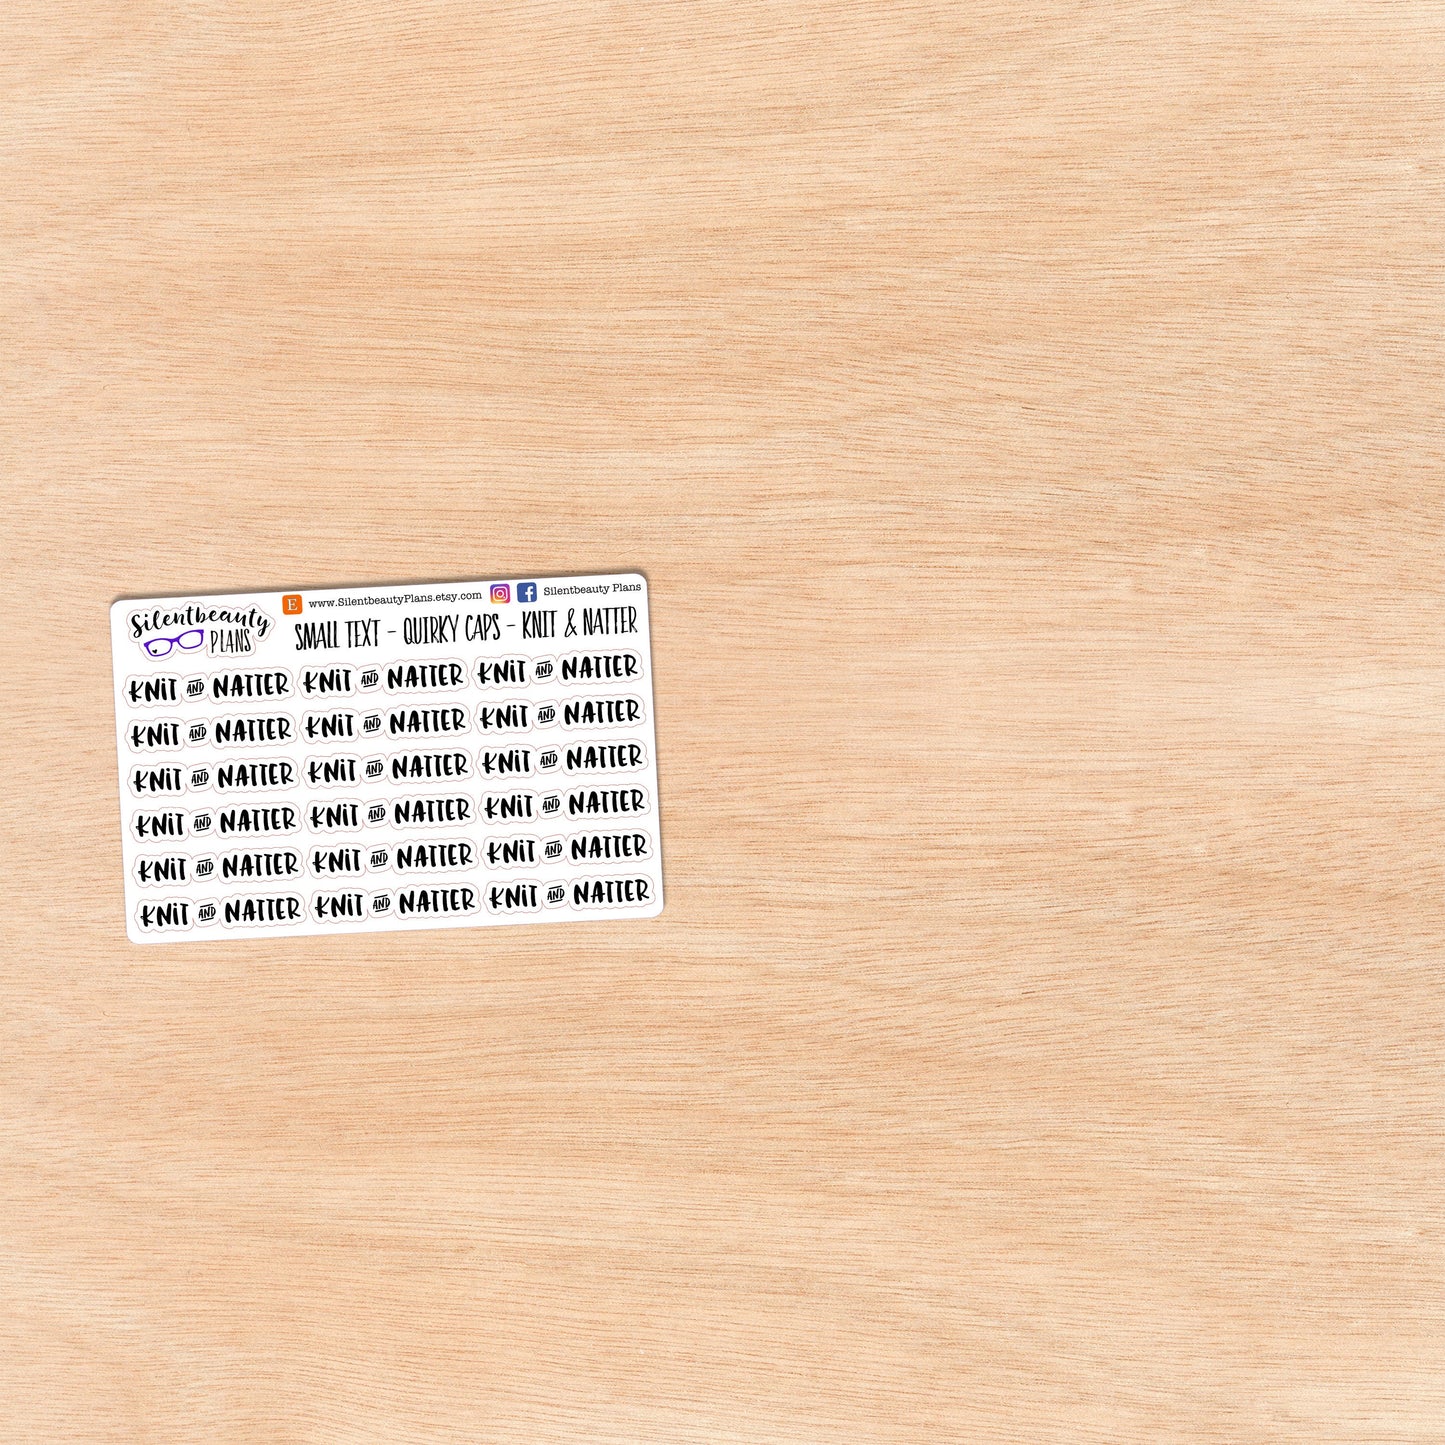 Tiny Text - I - J - K - Words & Phrases - Quirky Caps - Script Stickers